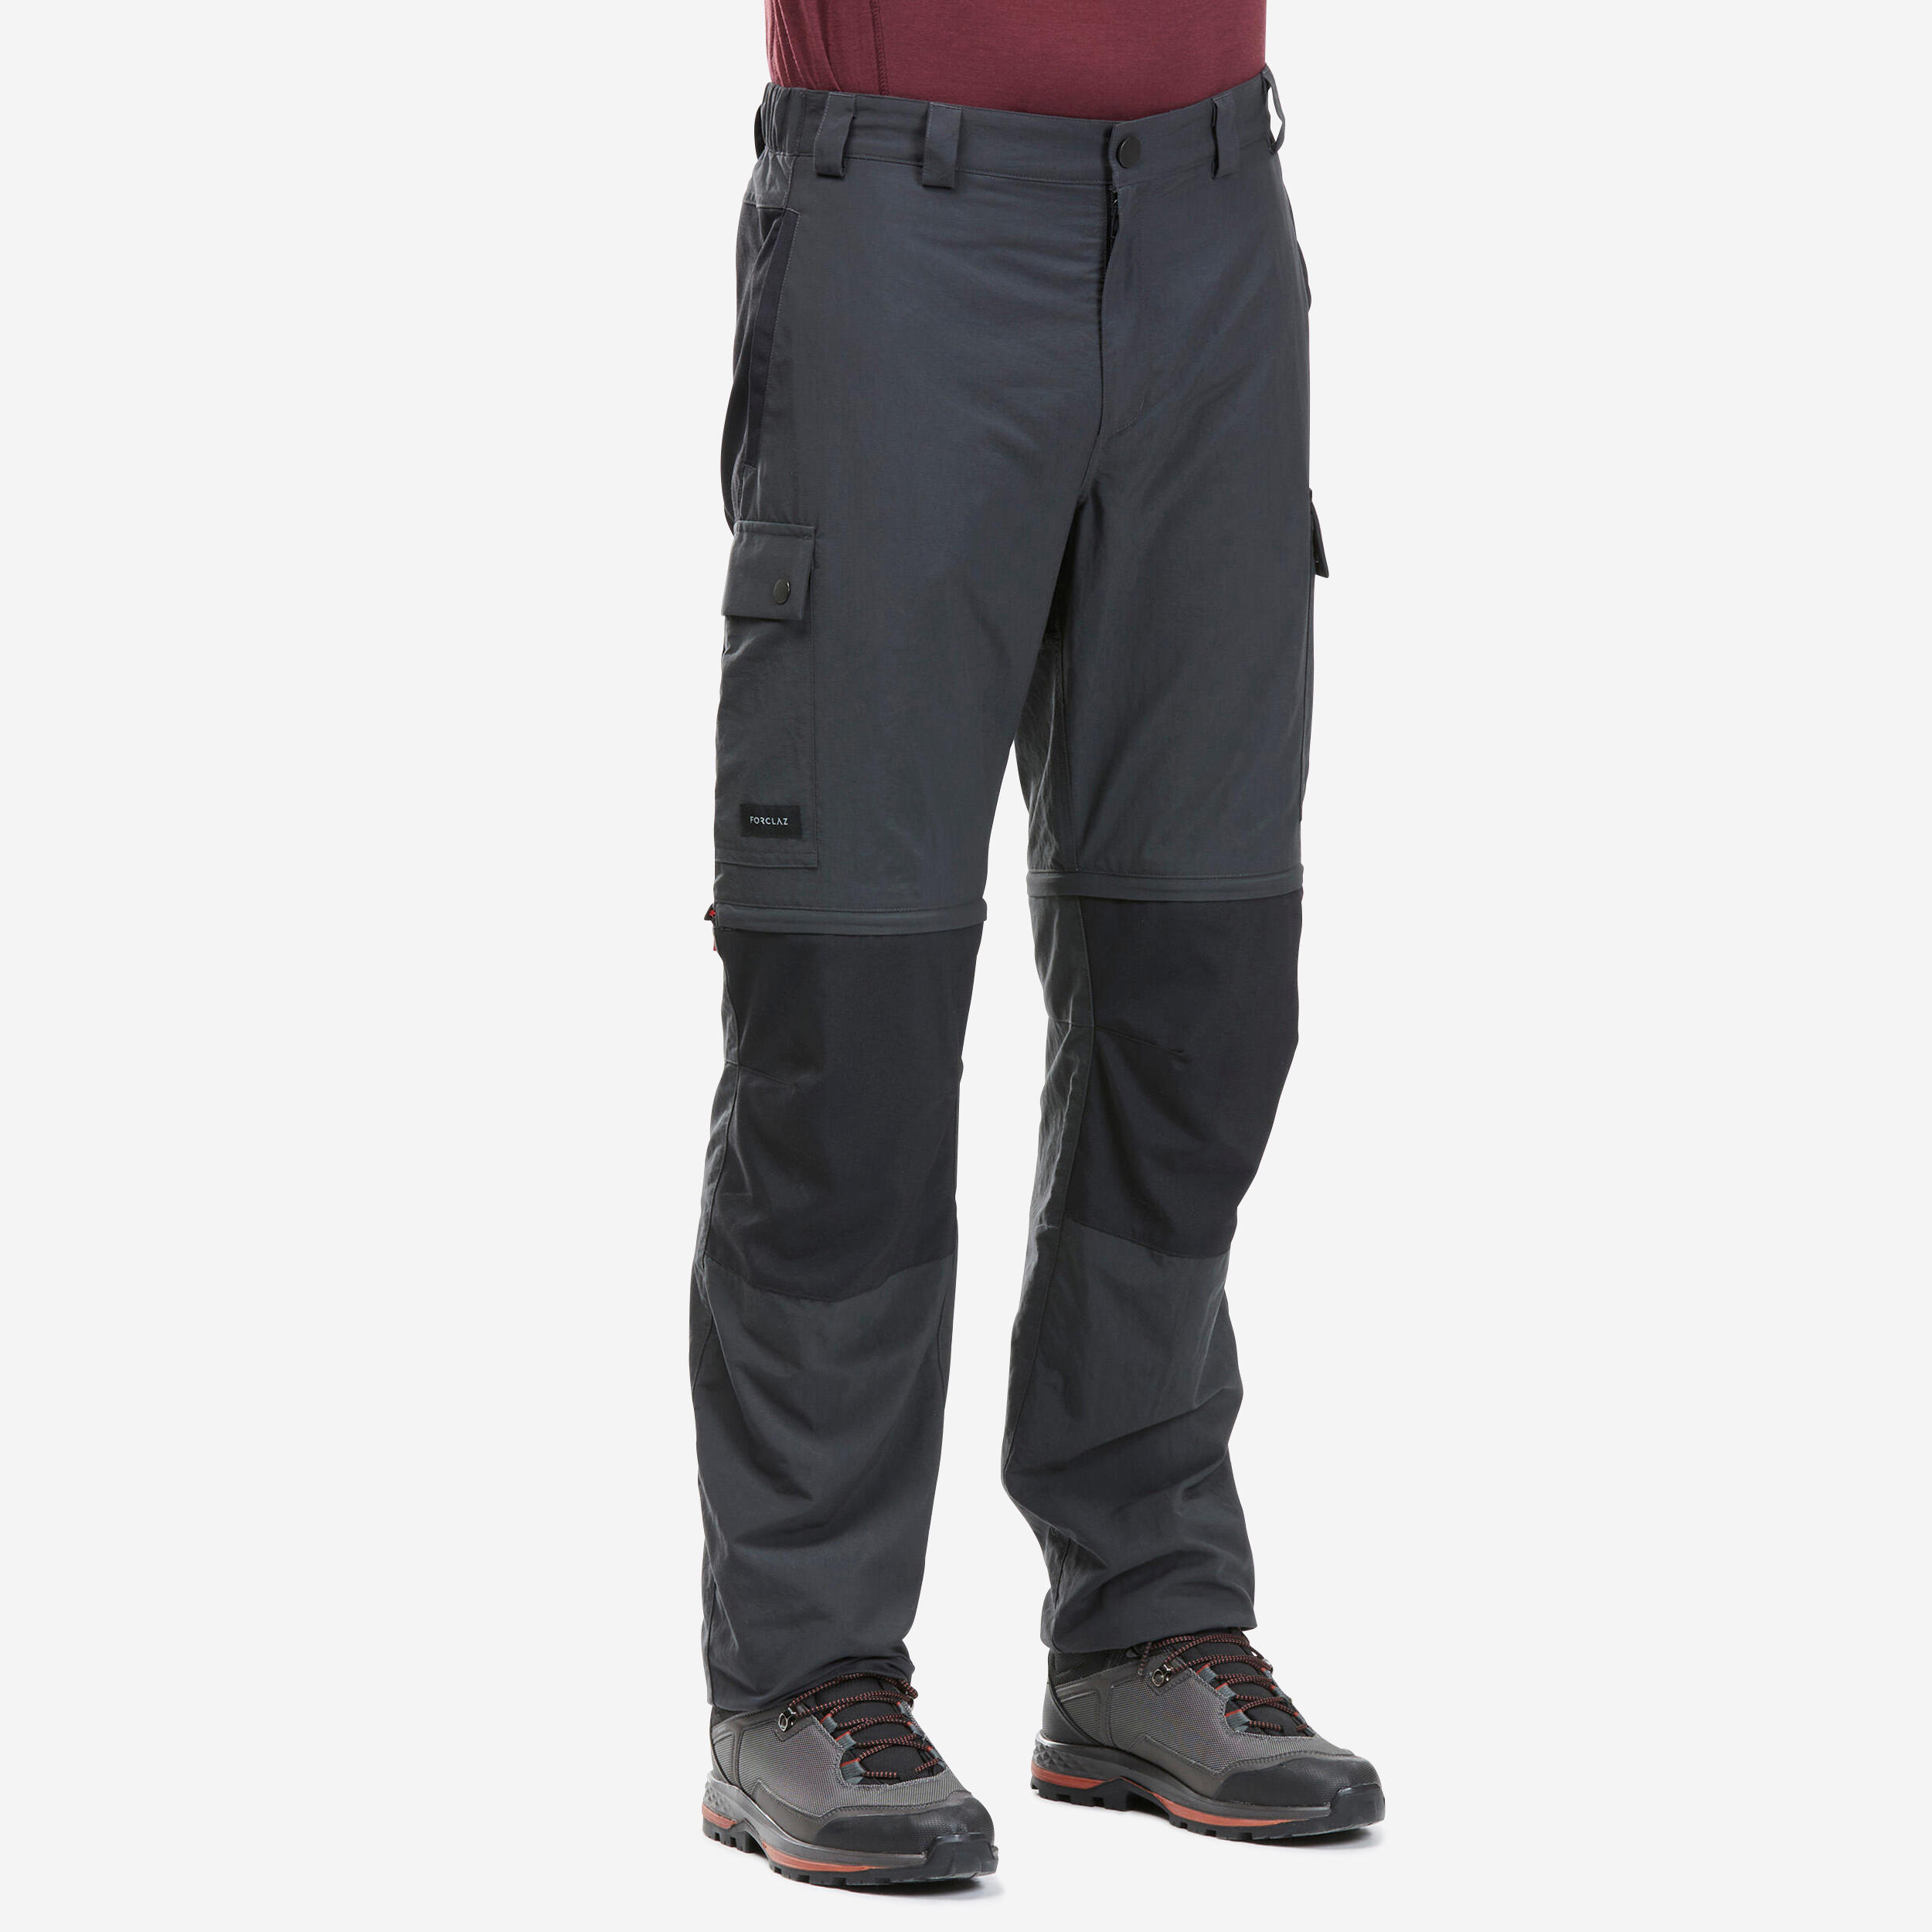 Wrangler Men's ATG Side Zip 5-Pocket Pants - Brown 30x30 | Pocket pants,  Cargo pants men, Side zip pants